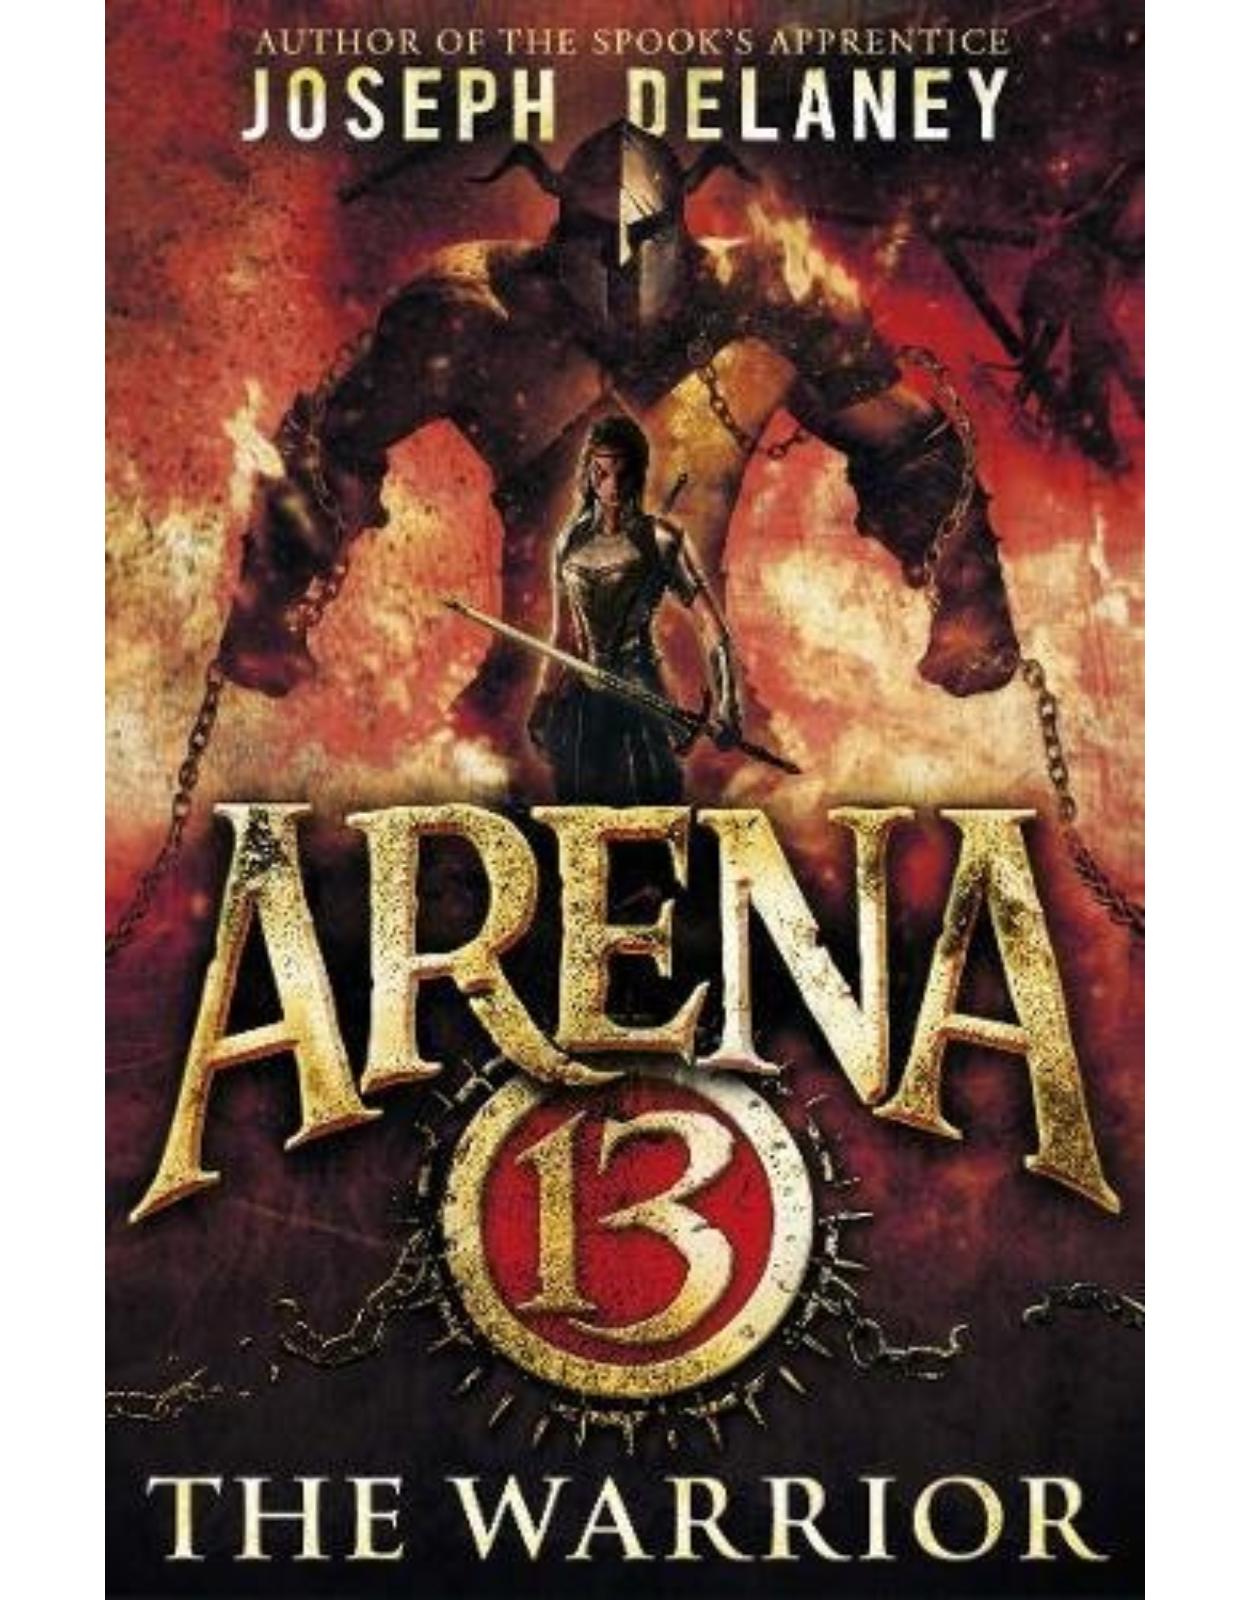 Arena 13: The Warrior